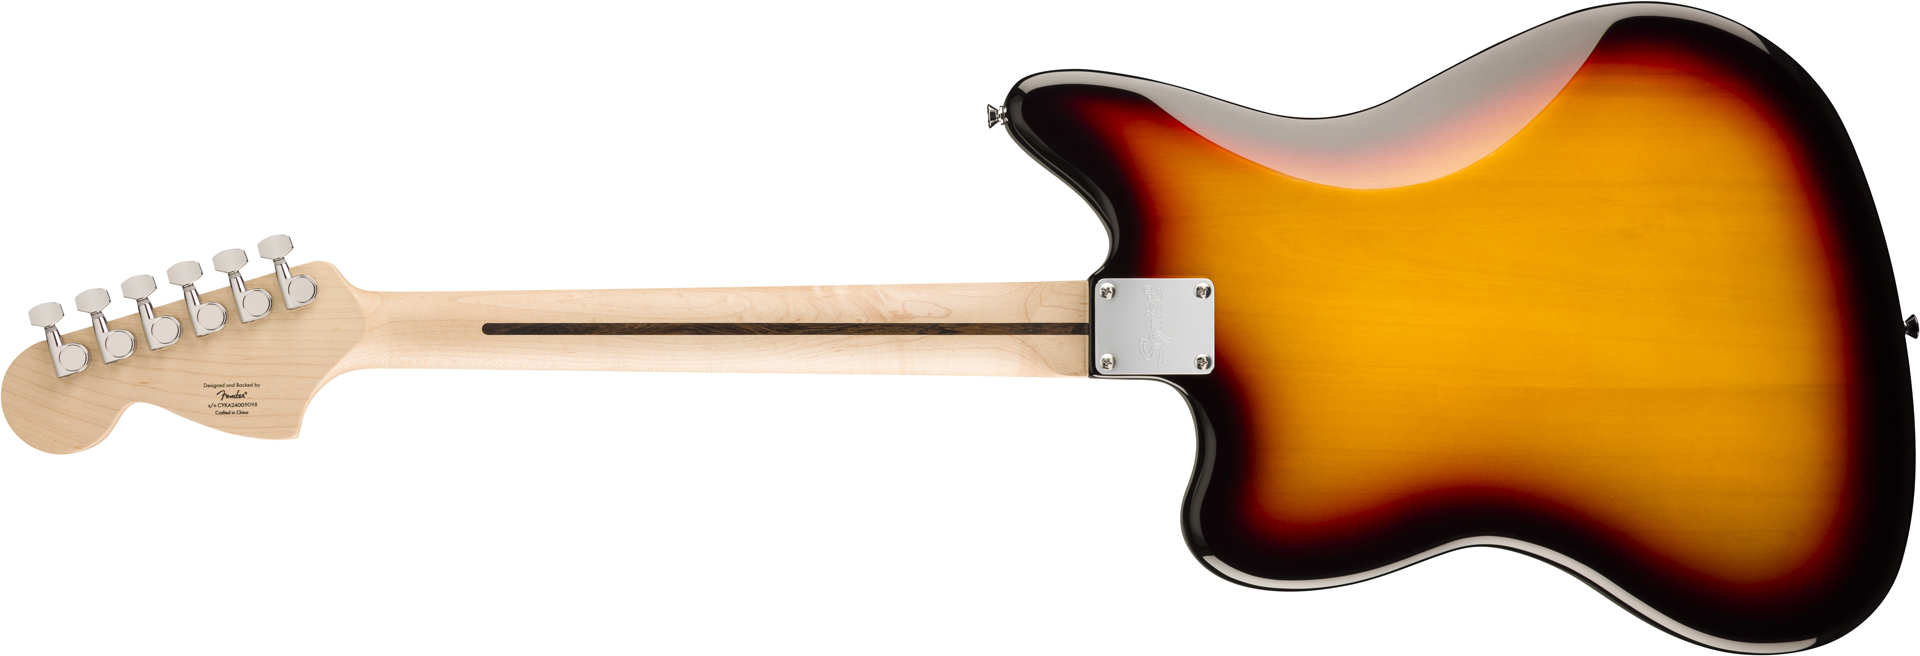 Rear of the Fender Squier Affinity Jaguar